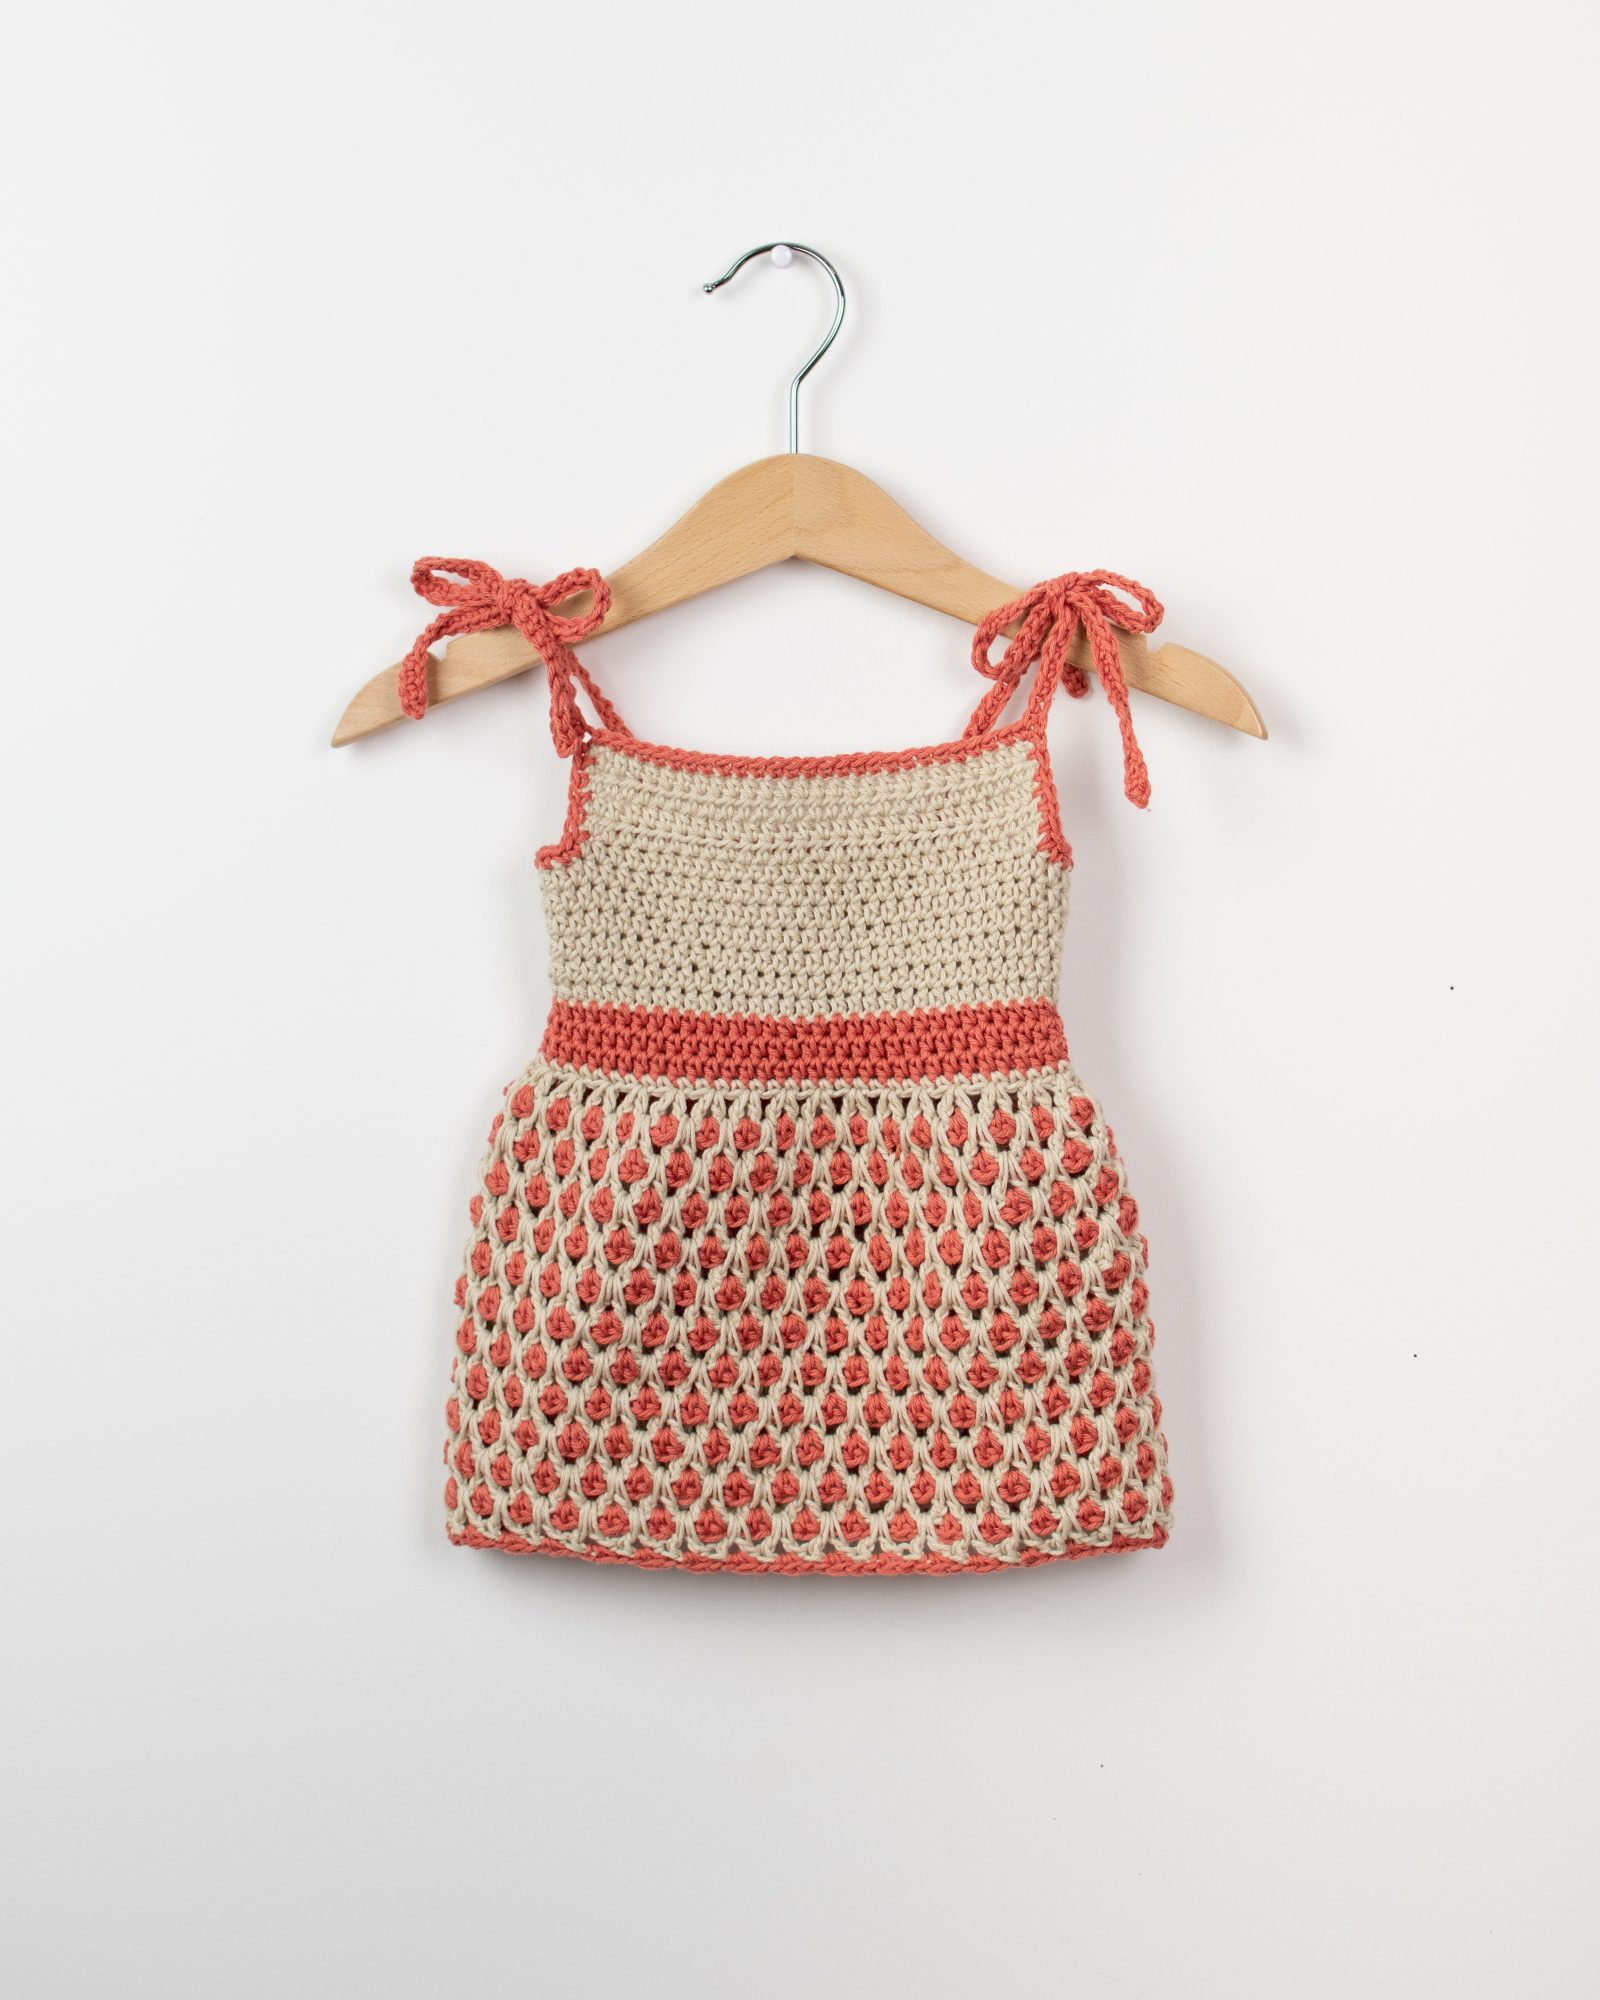 Crochet Baby Dress Free Pattern Crochet Pattern For A Ba Dress Little Ladybug Cro Patterns